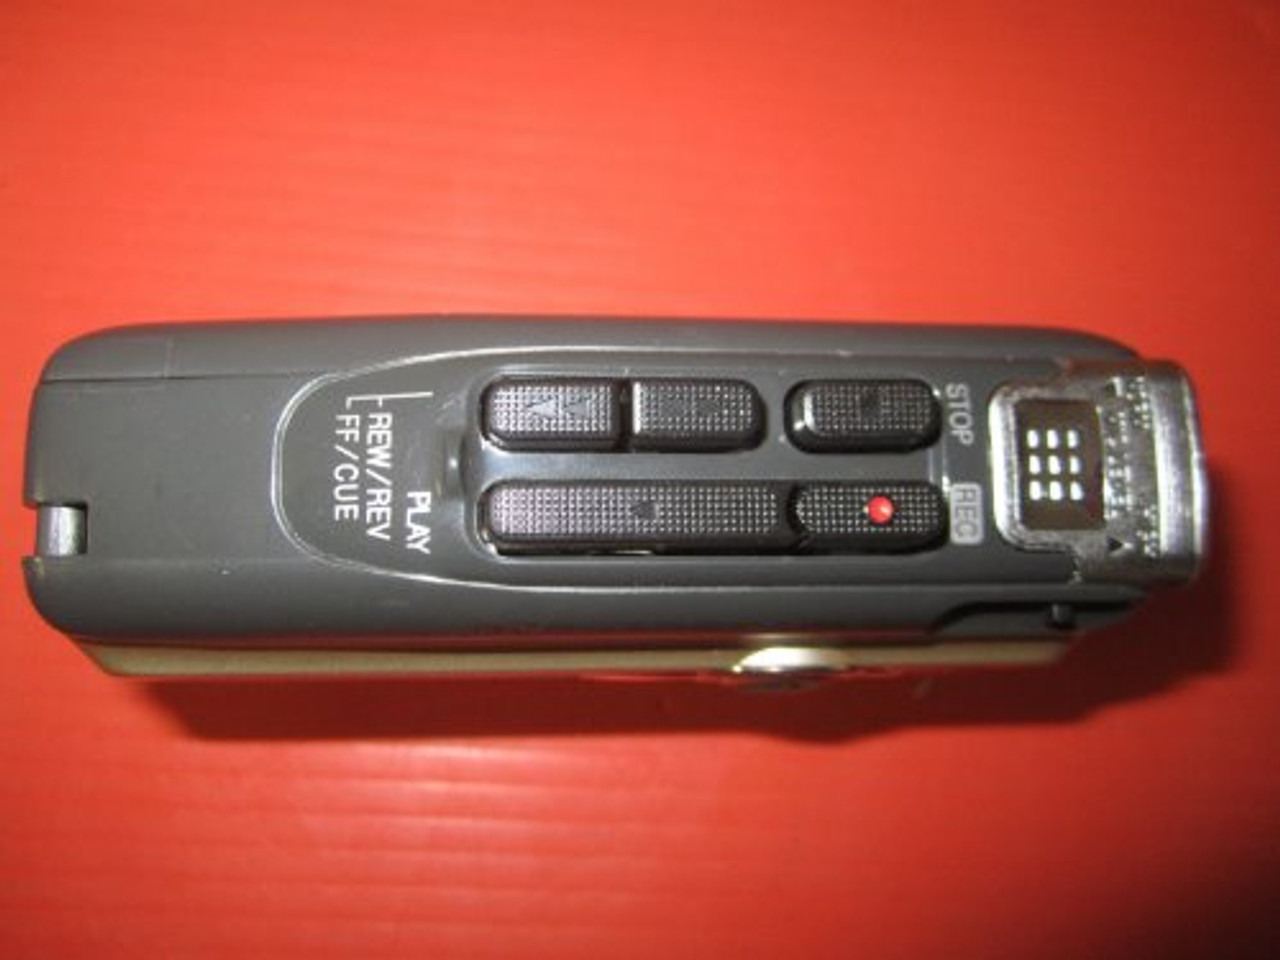 Panasonic Rq-l51 Voice Activated Cassette Recorder controls